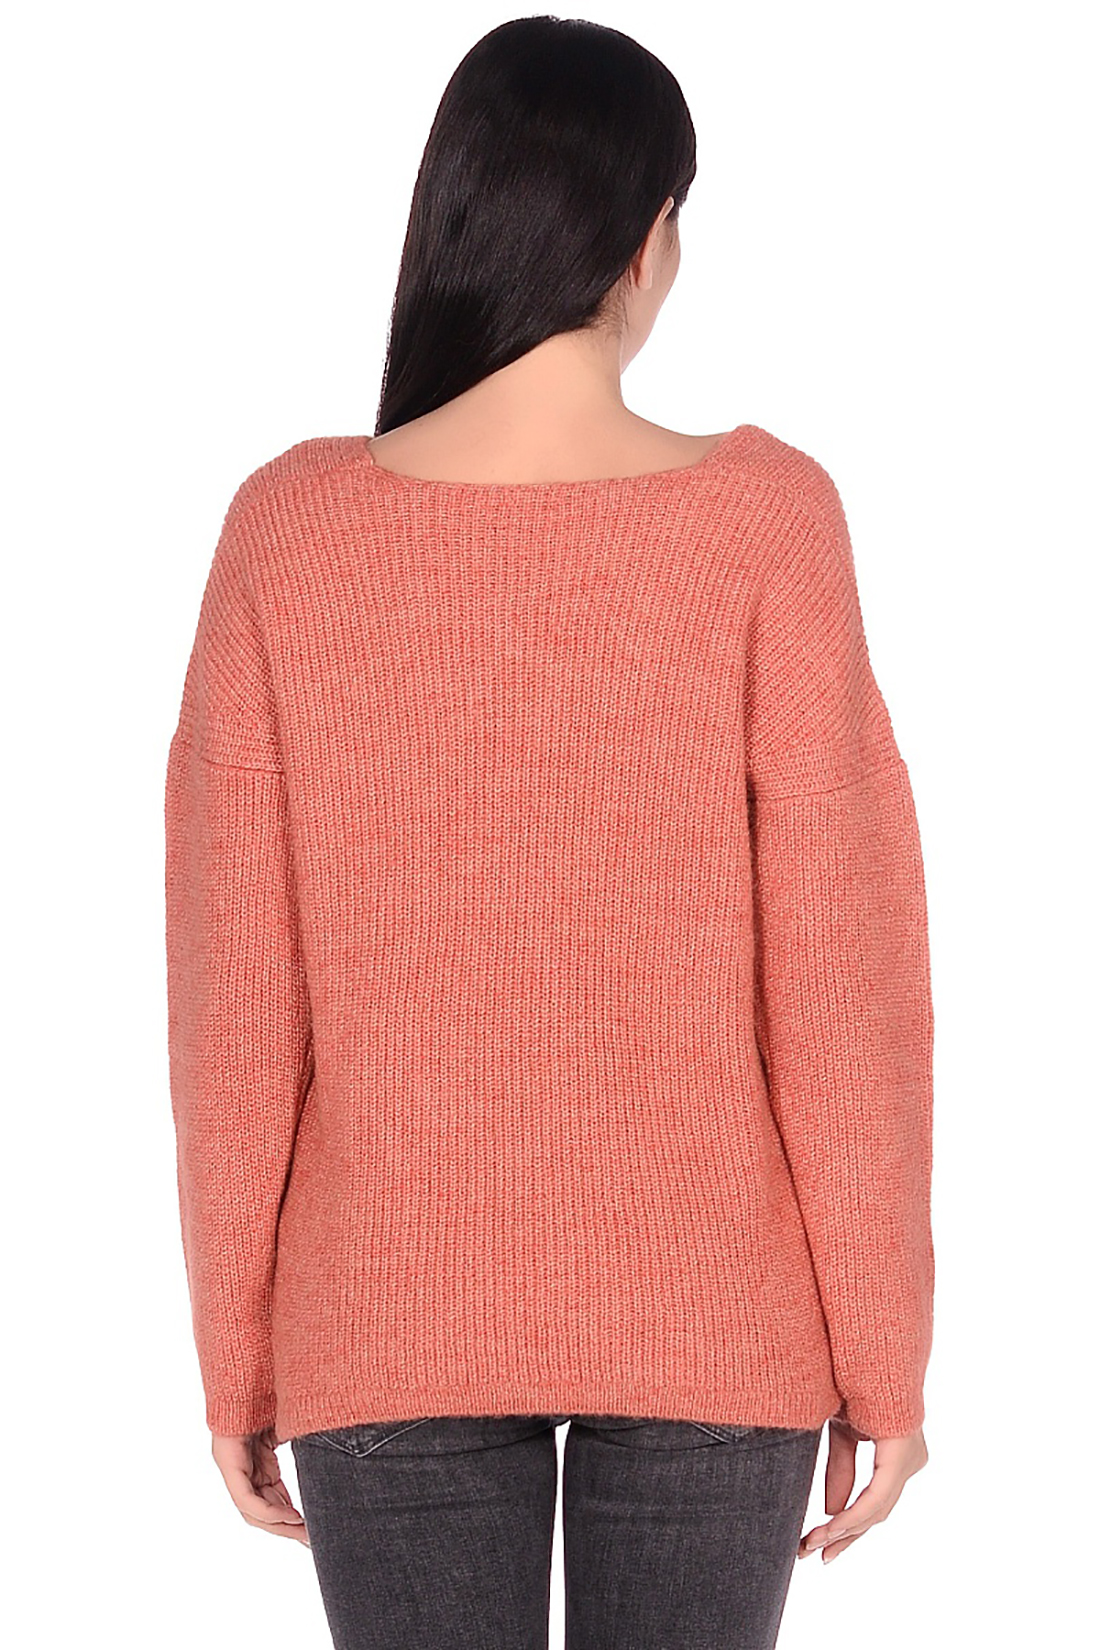 Пуловер с альпакой и мохером (арт. baon B139529), размер L, цвет coral reef melange#розовый Пуловер с альпакой и мохером (арт. baon B139529) - фото 3